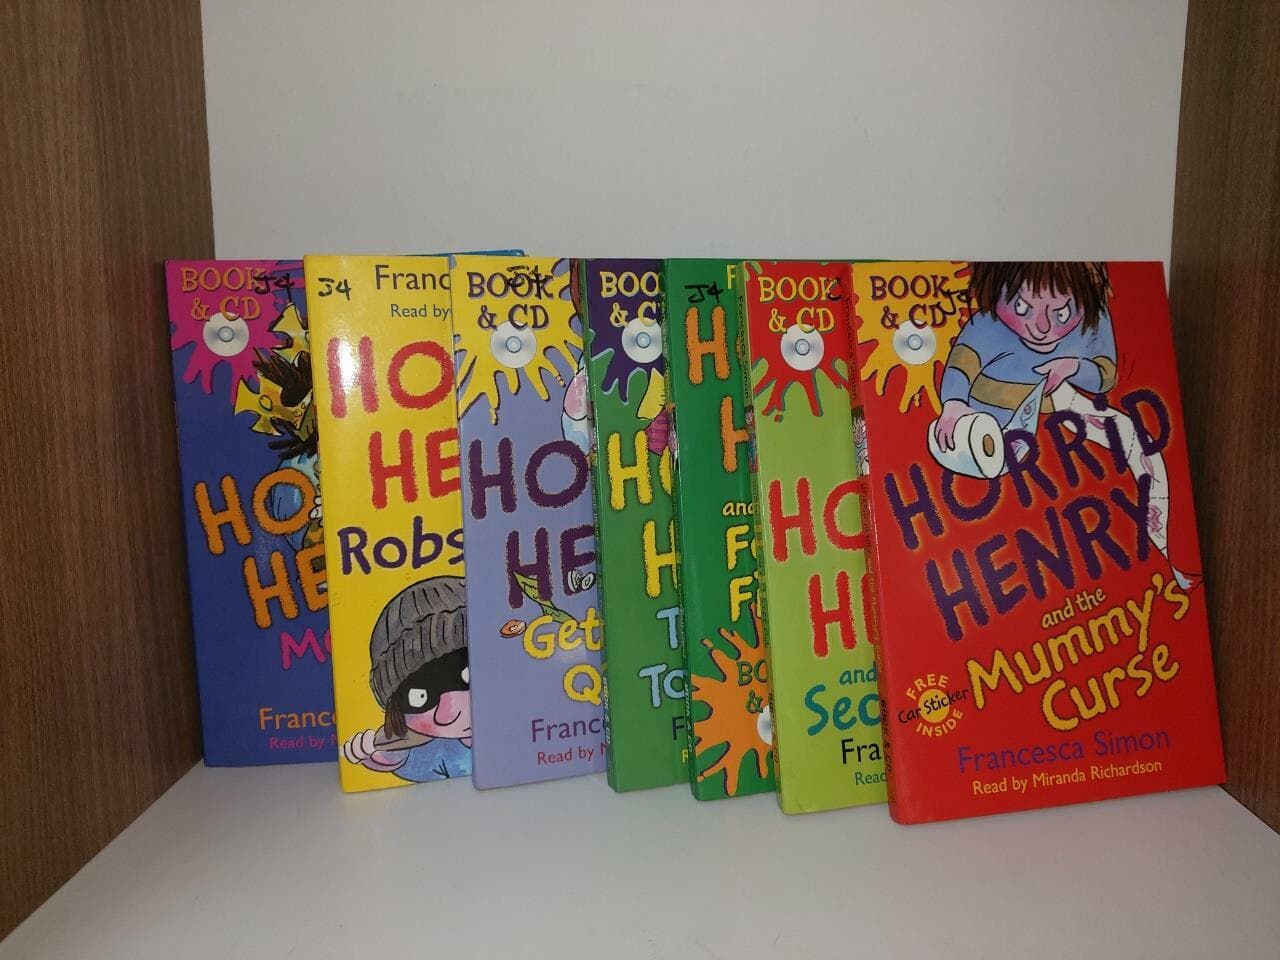 Horrid Henry Gets Rich Quick 17권, CD 17장, 워드북1권